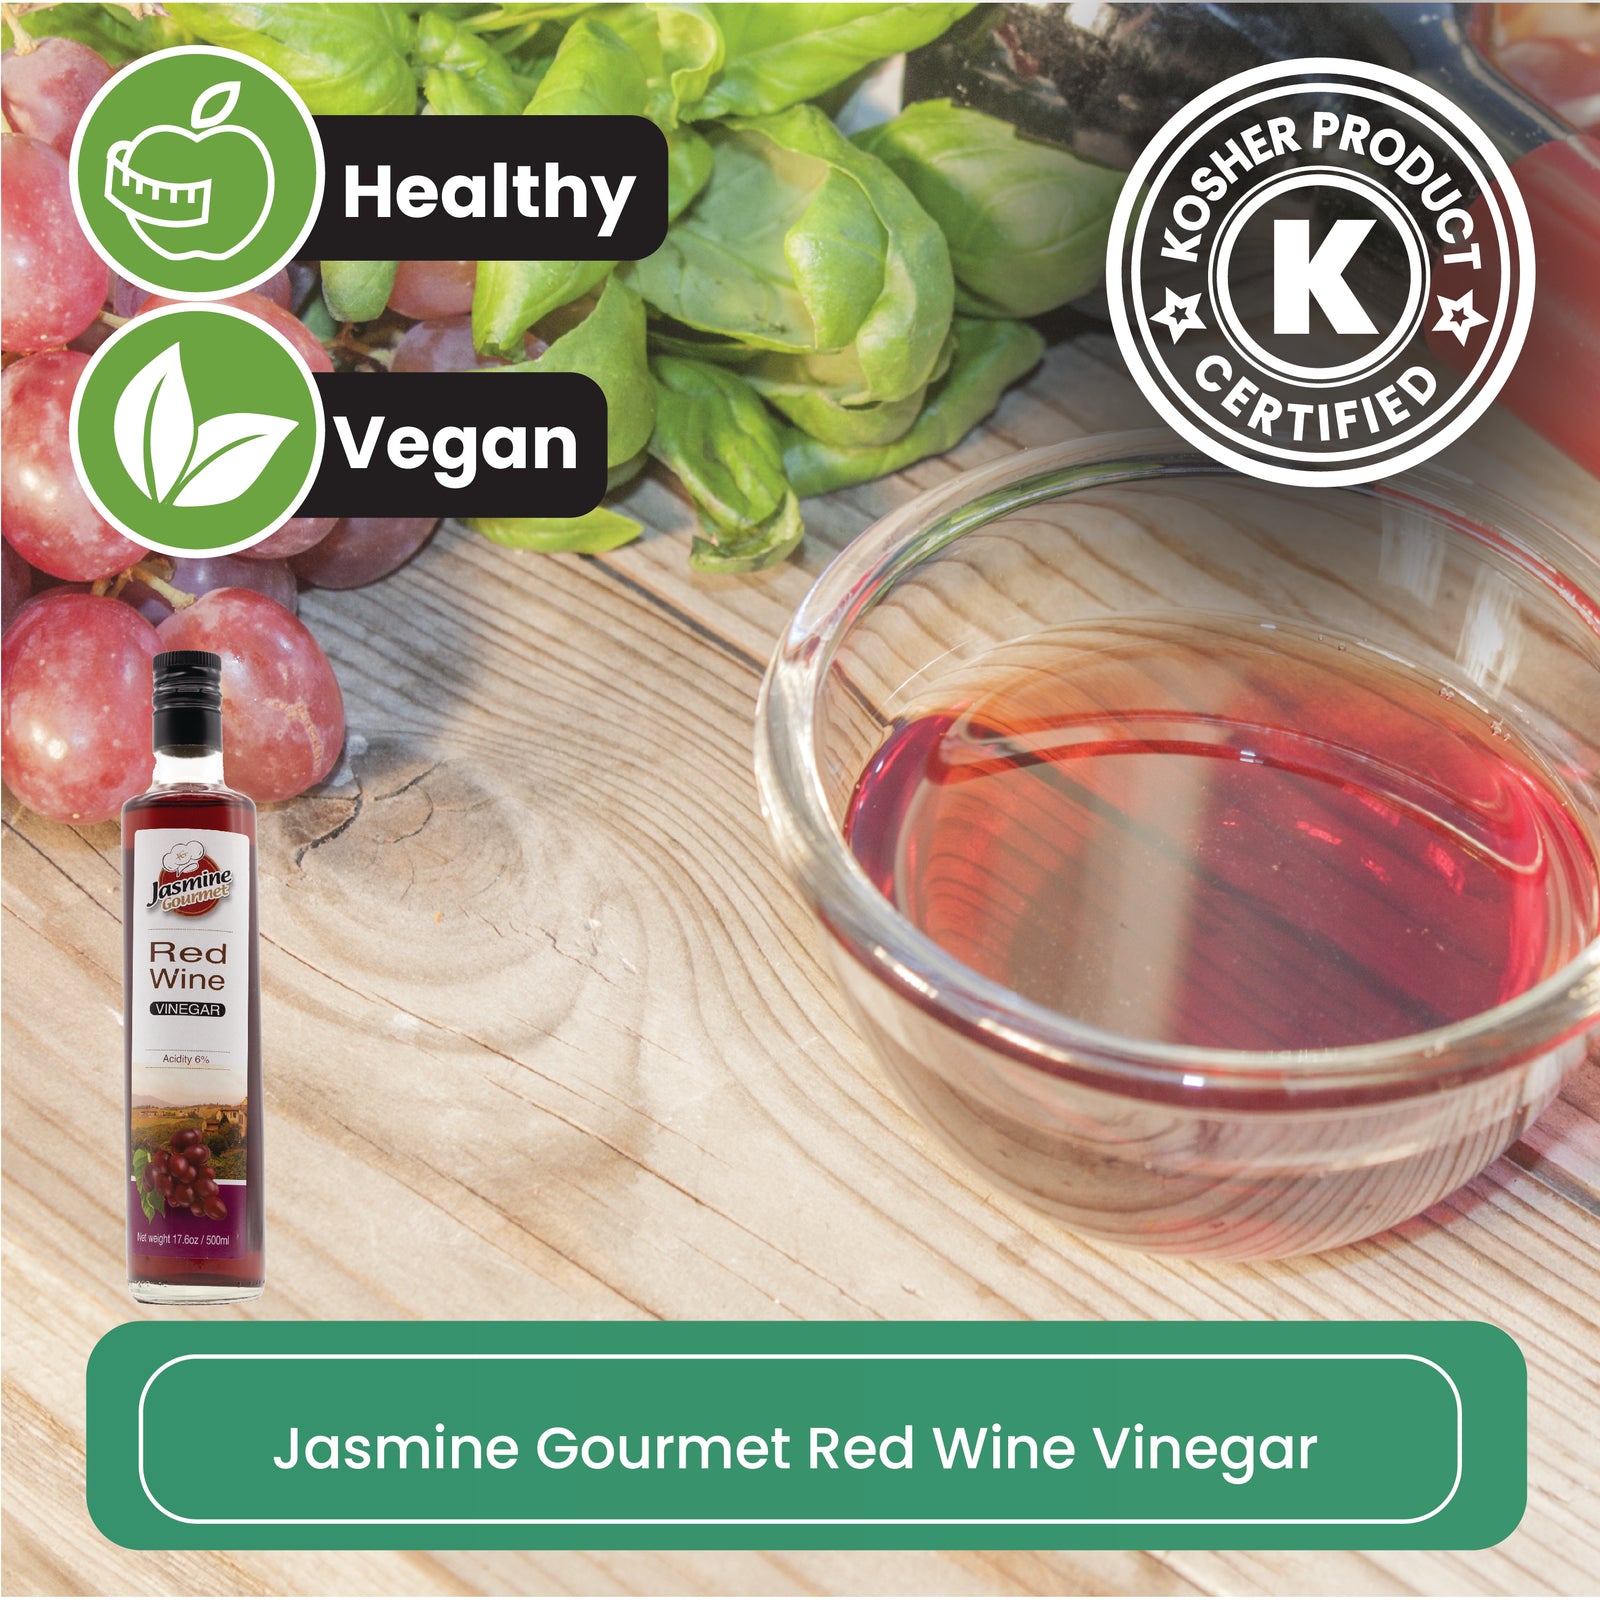 Jasmine Gourmet Red Wine Vinegar Acidity 6%